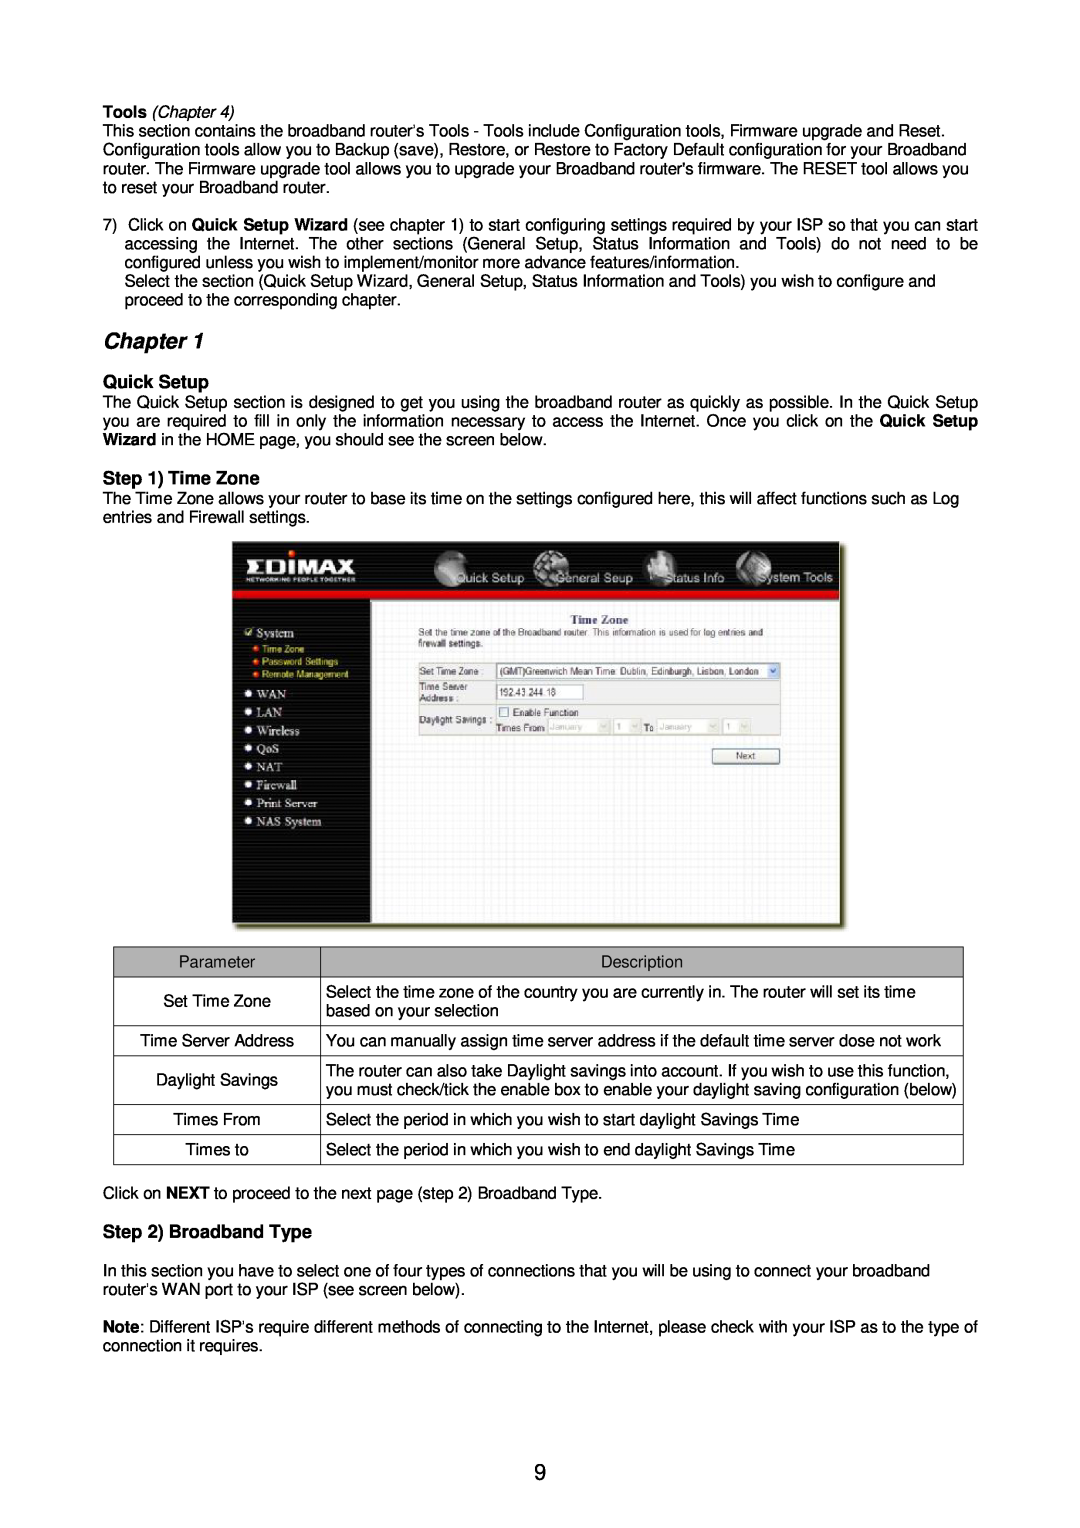 Edimax Technology Broadband Router manual Chapter, Quick Setup, Time Zone, Broadband Type 